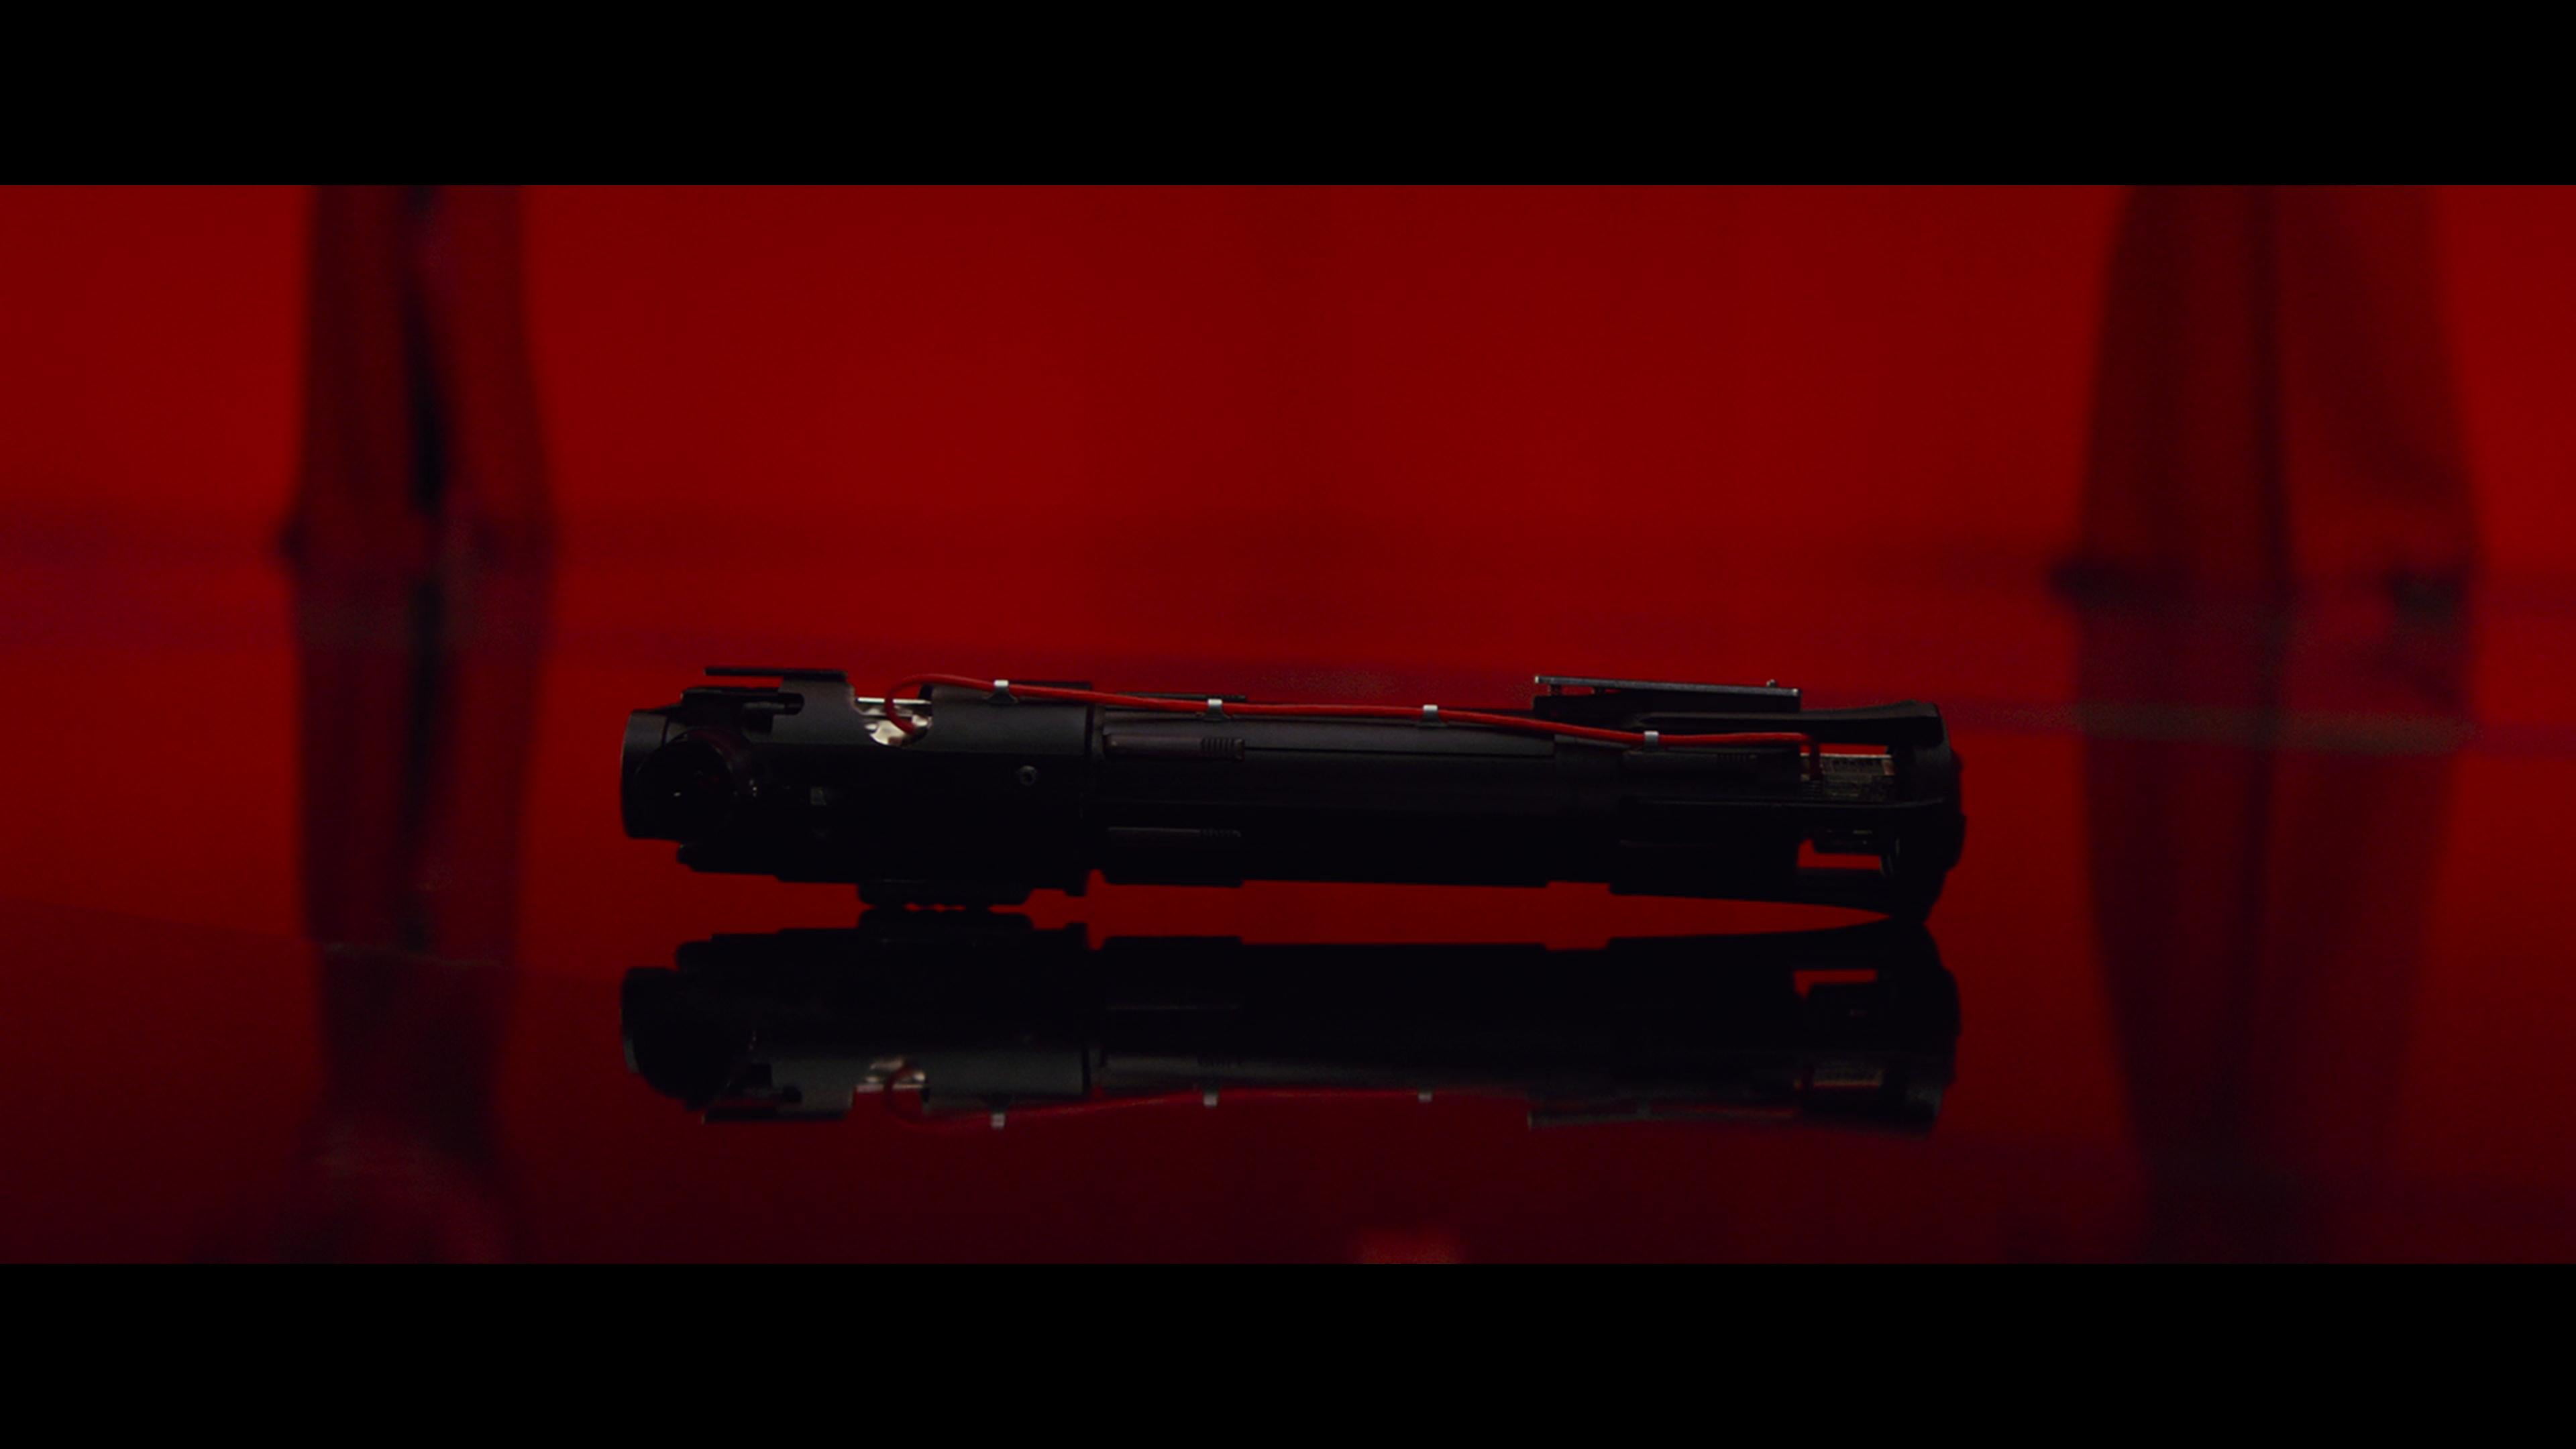 black light saber toy, Star Wars: The Last Jedi, movies, lightsaber, Kylo Ren